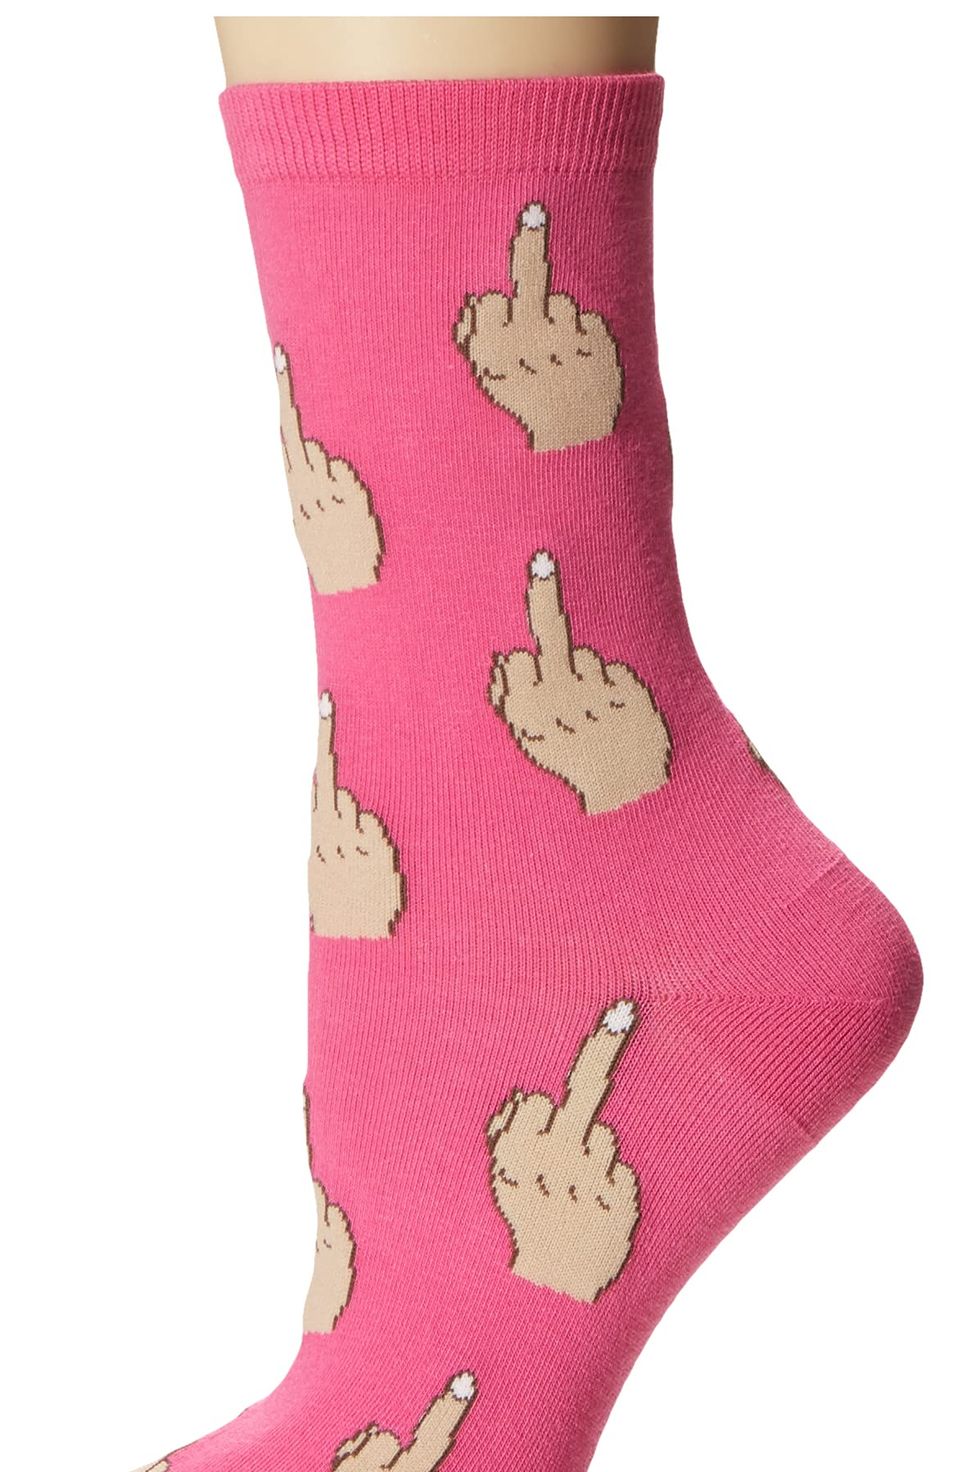 Middle Finger Socks